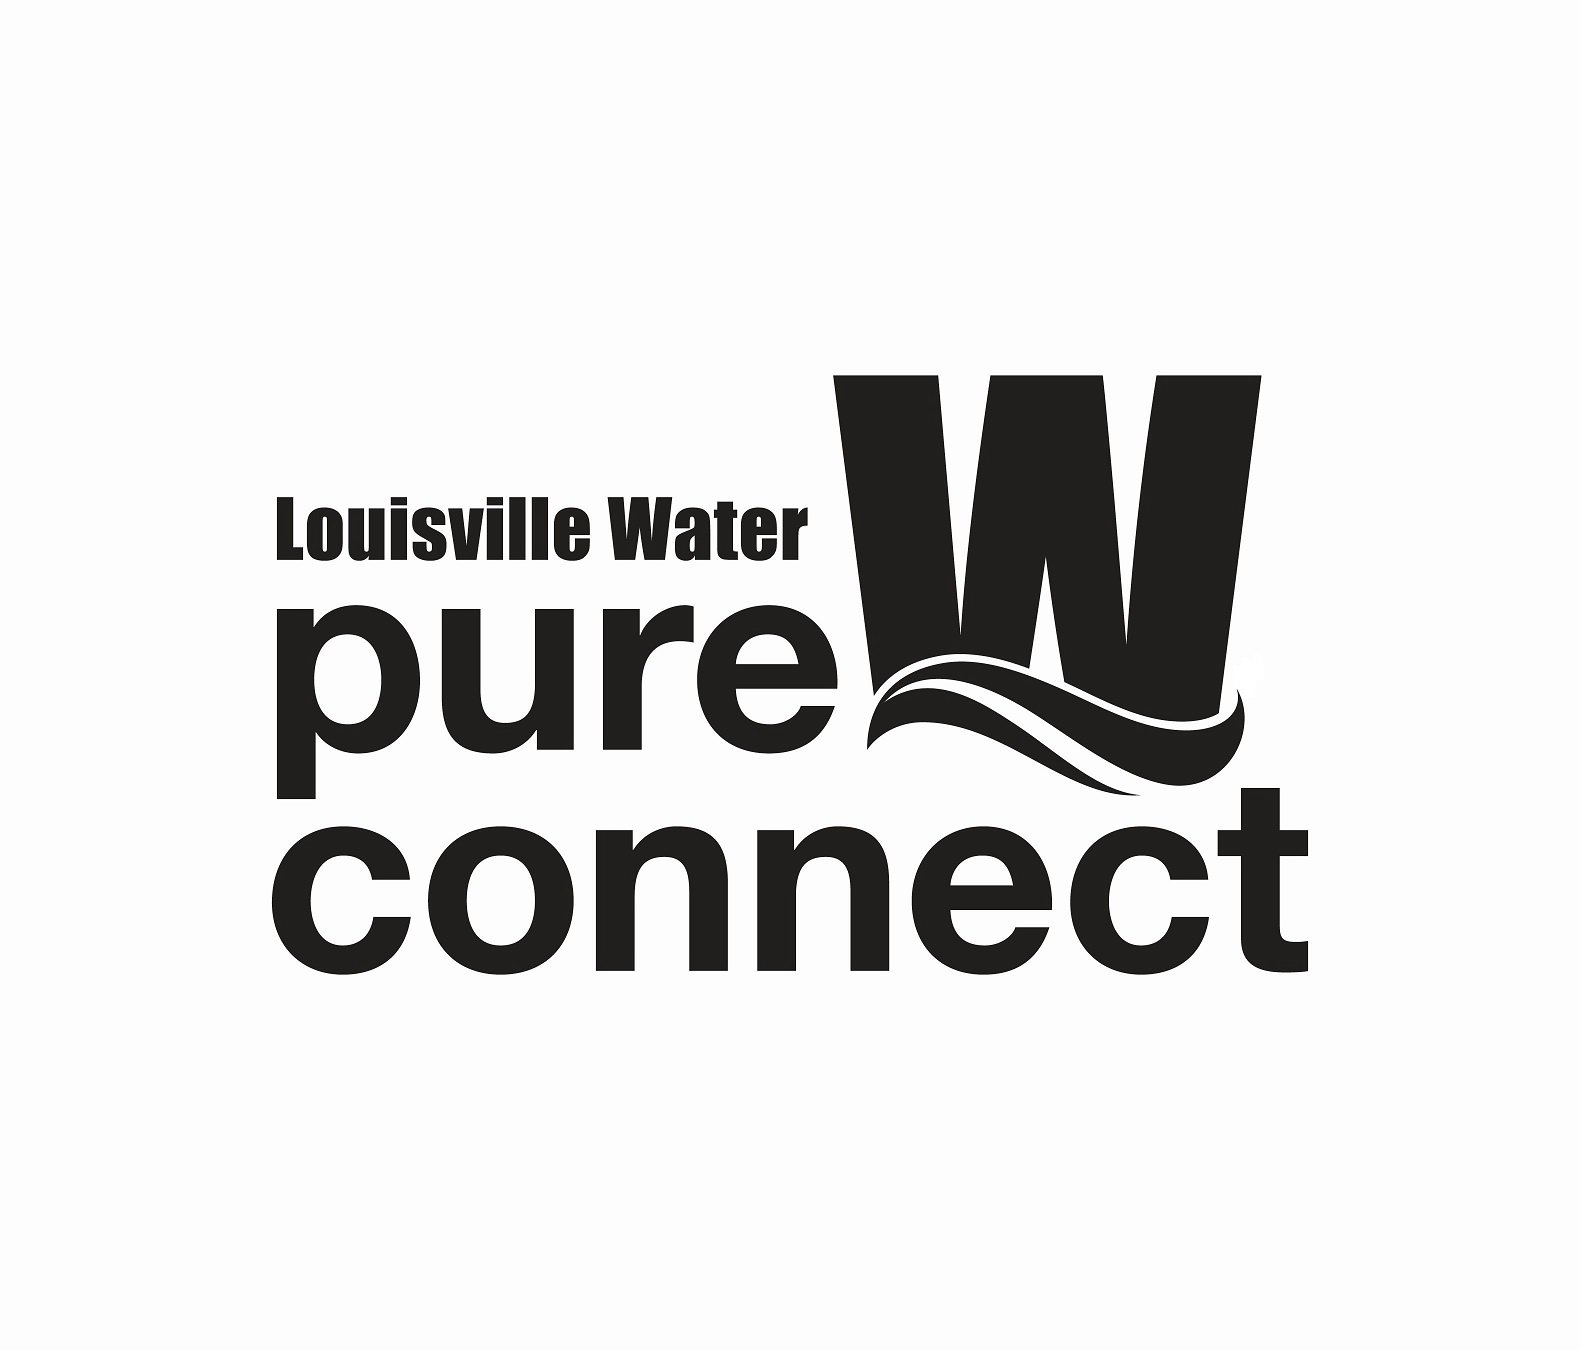 louisville-water-w-pure-connect-w-louisville-water-company-trademark